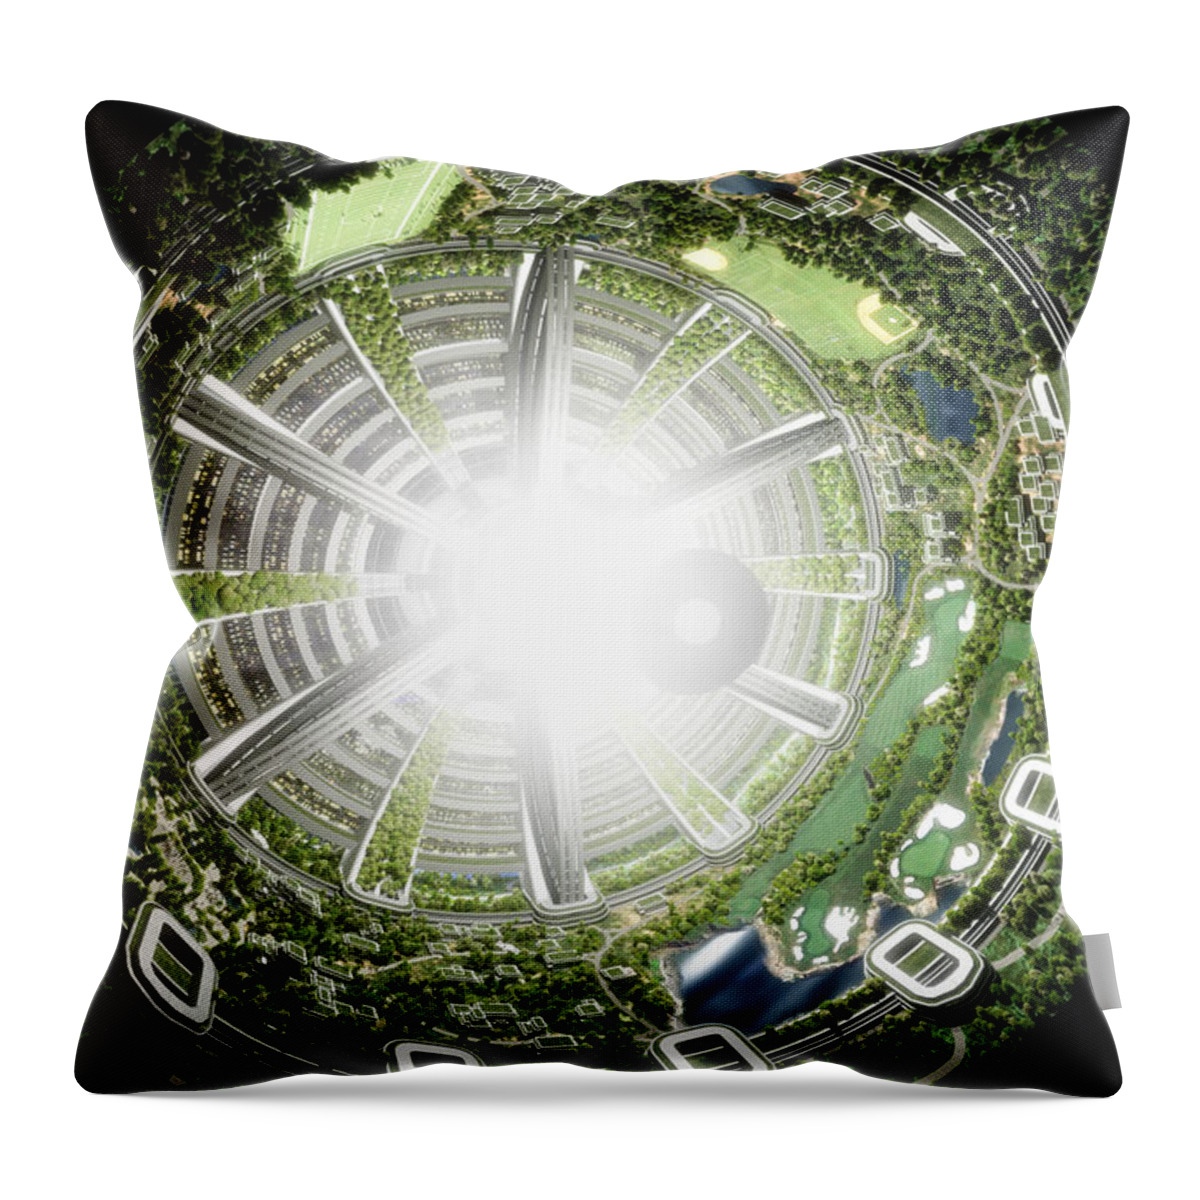 Kalpana One Throw Pillow featuring the digital art Kalpana One Space Station Section by Bryan Versteeg